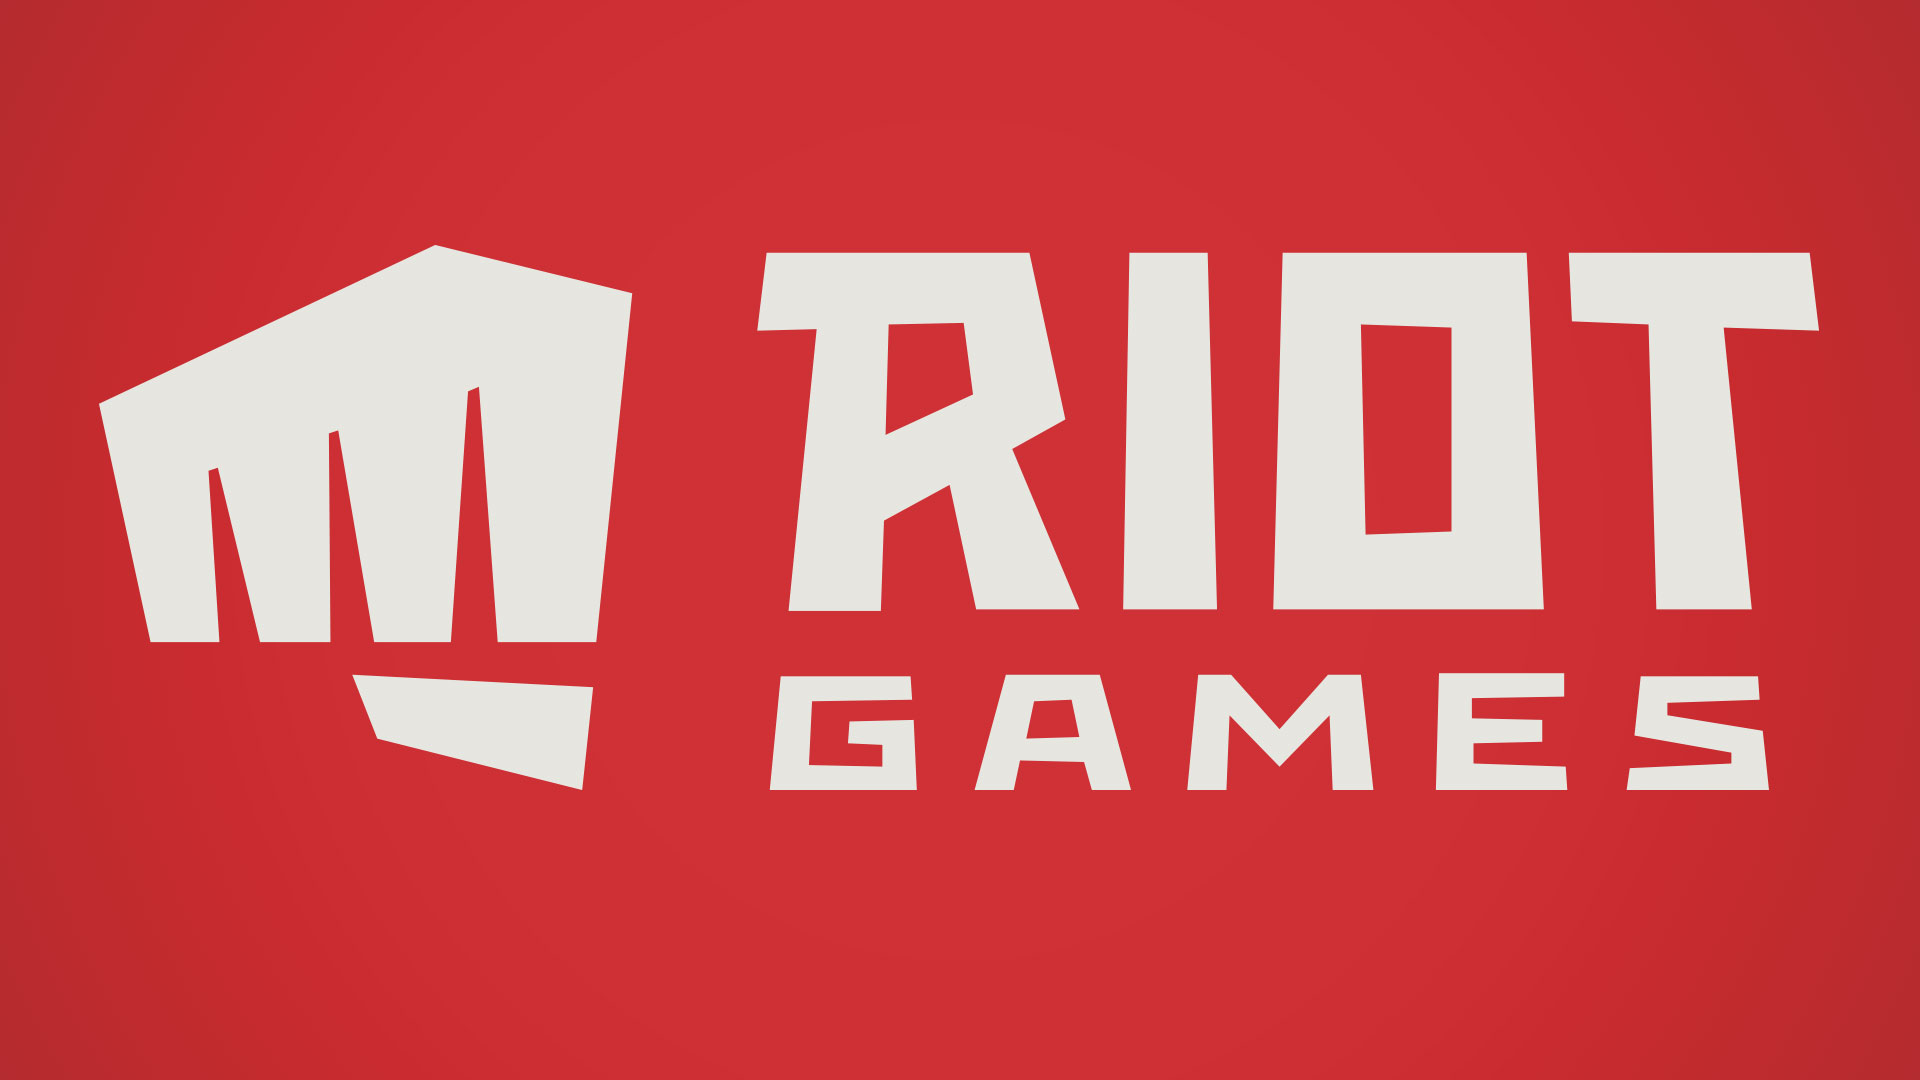 شرکت Riot Games